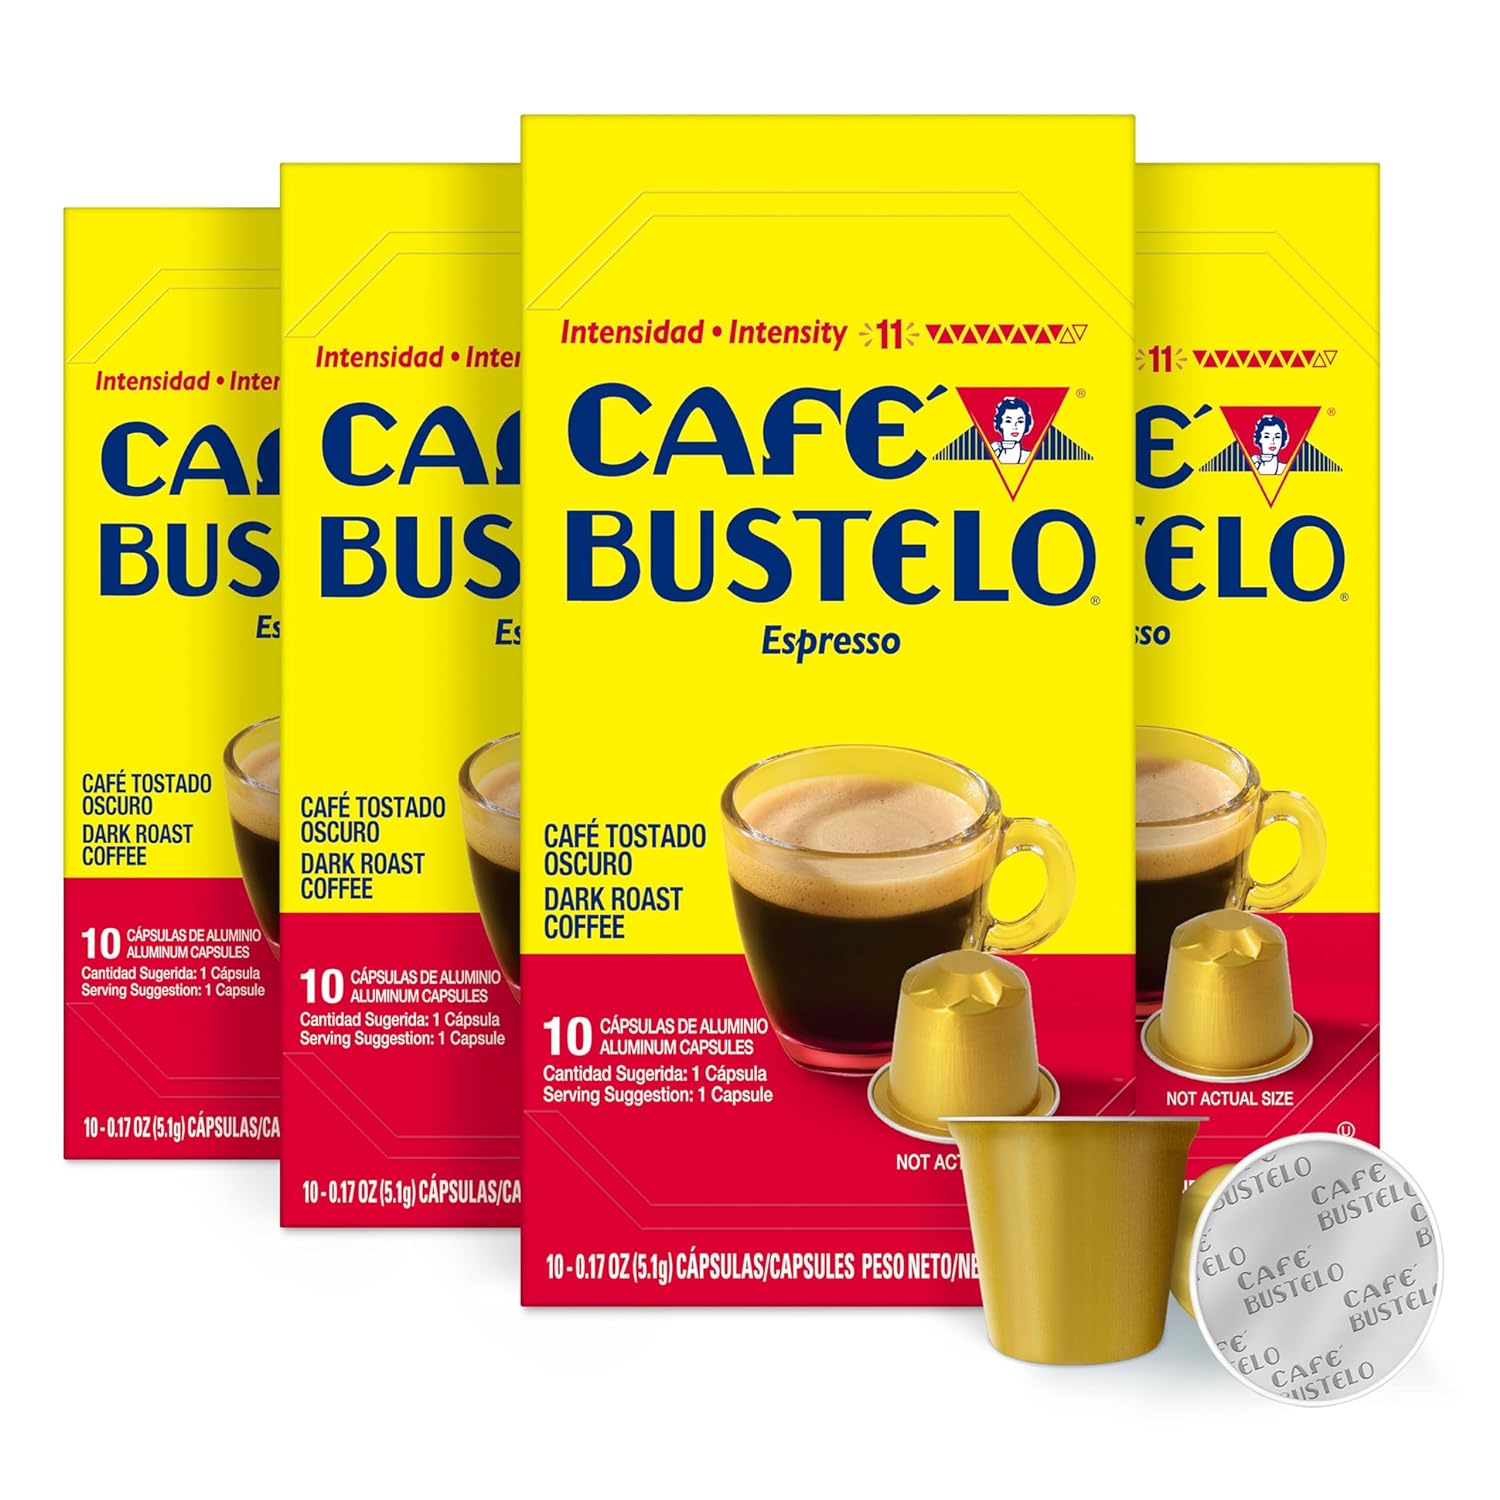 Caf Bustelo Aluminum Espresso Capsules, Dark Roast Coffee, Nespresso OriginalLine Compatible, Intensity 11, 40 Count